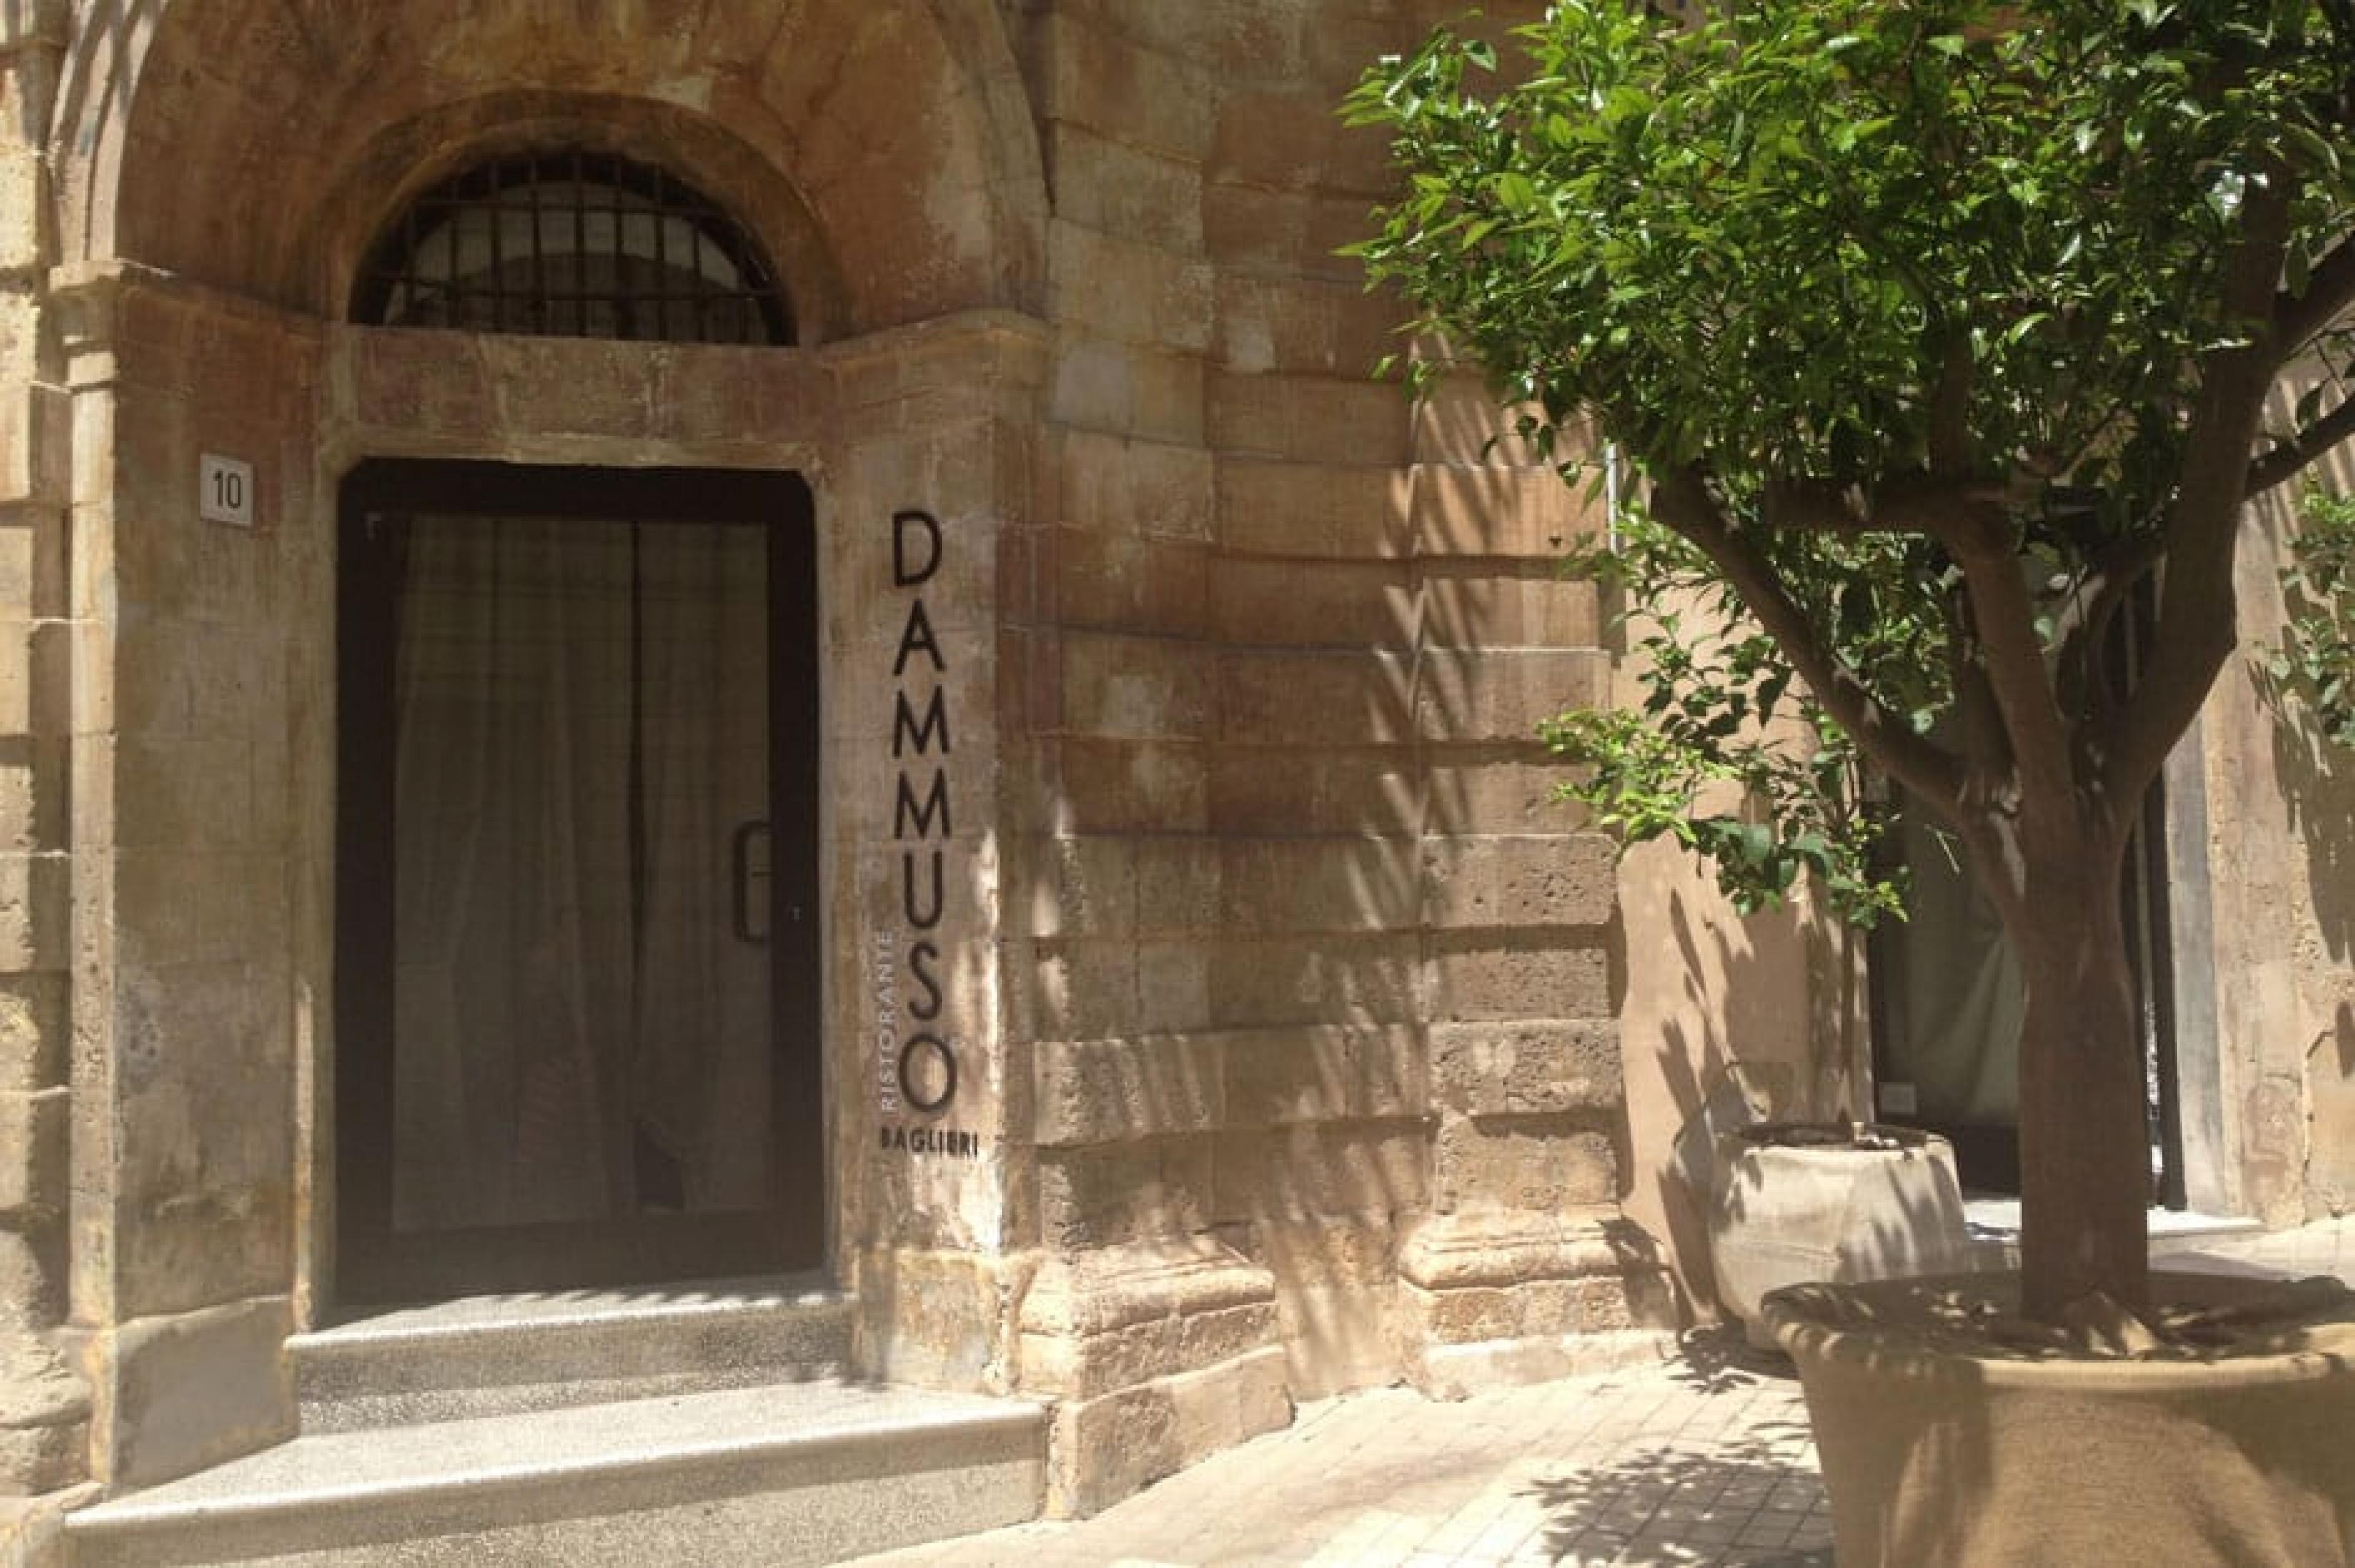 Entrance at Dammuso, Sicily, Italy